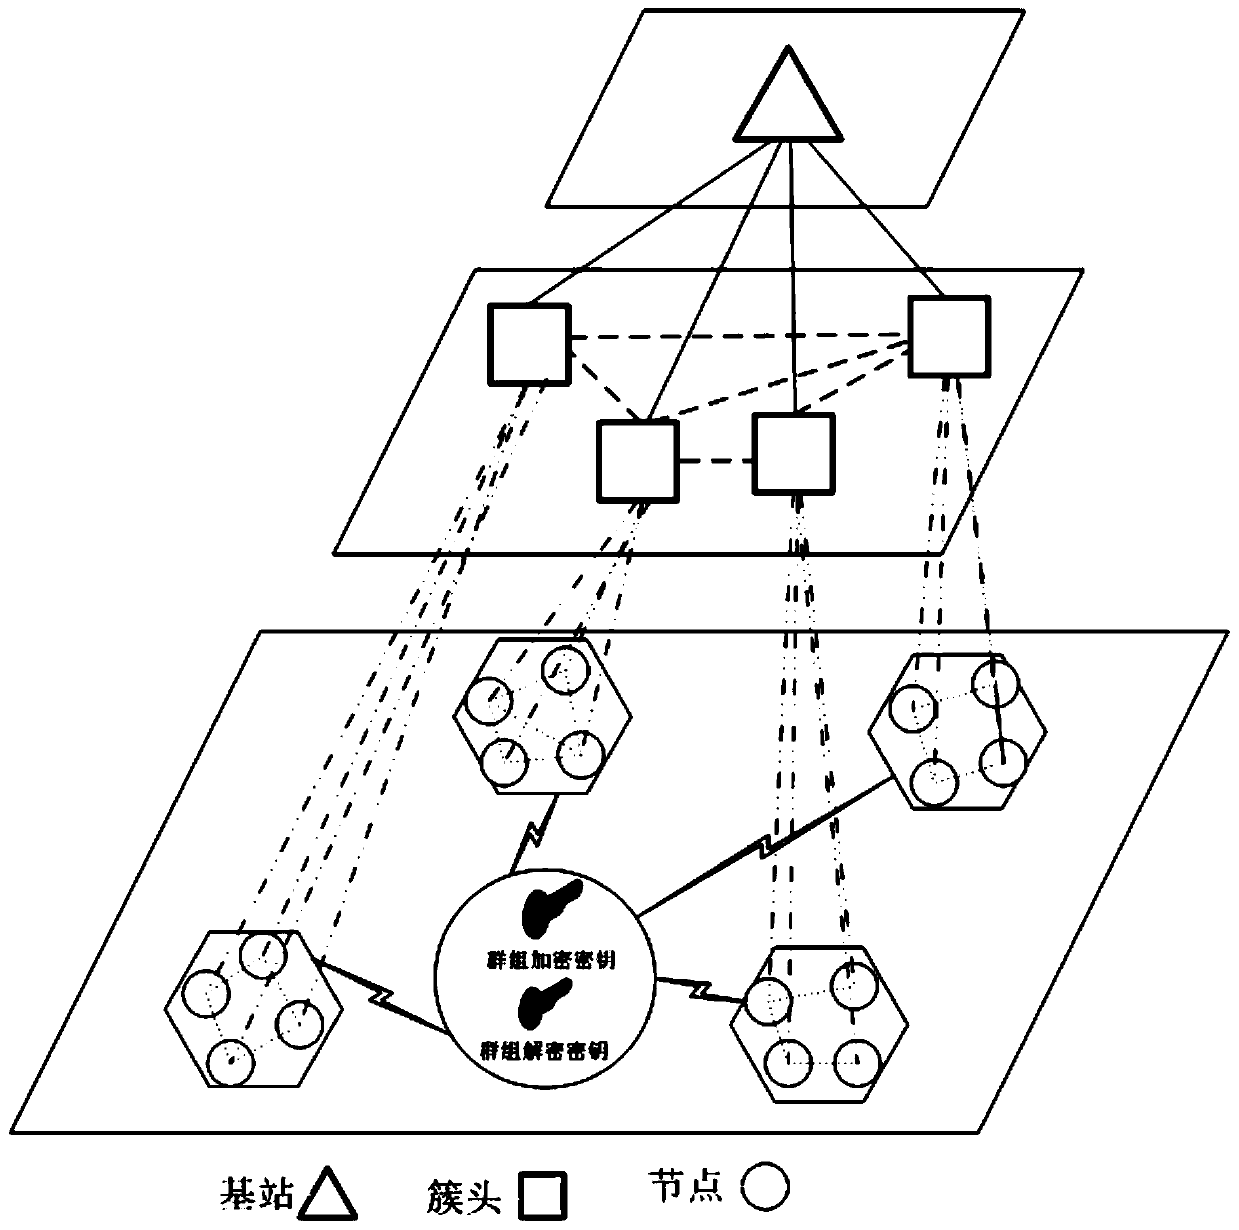 Cross-cluster asymmetric group key agreement method in wireless sensor networks